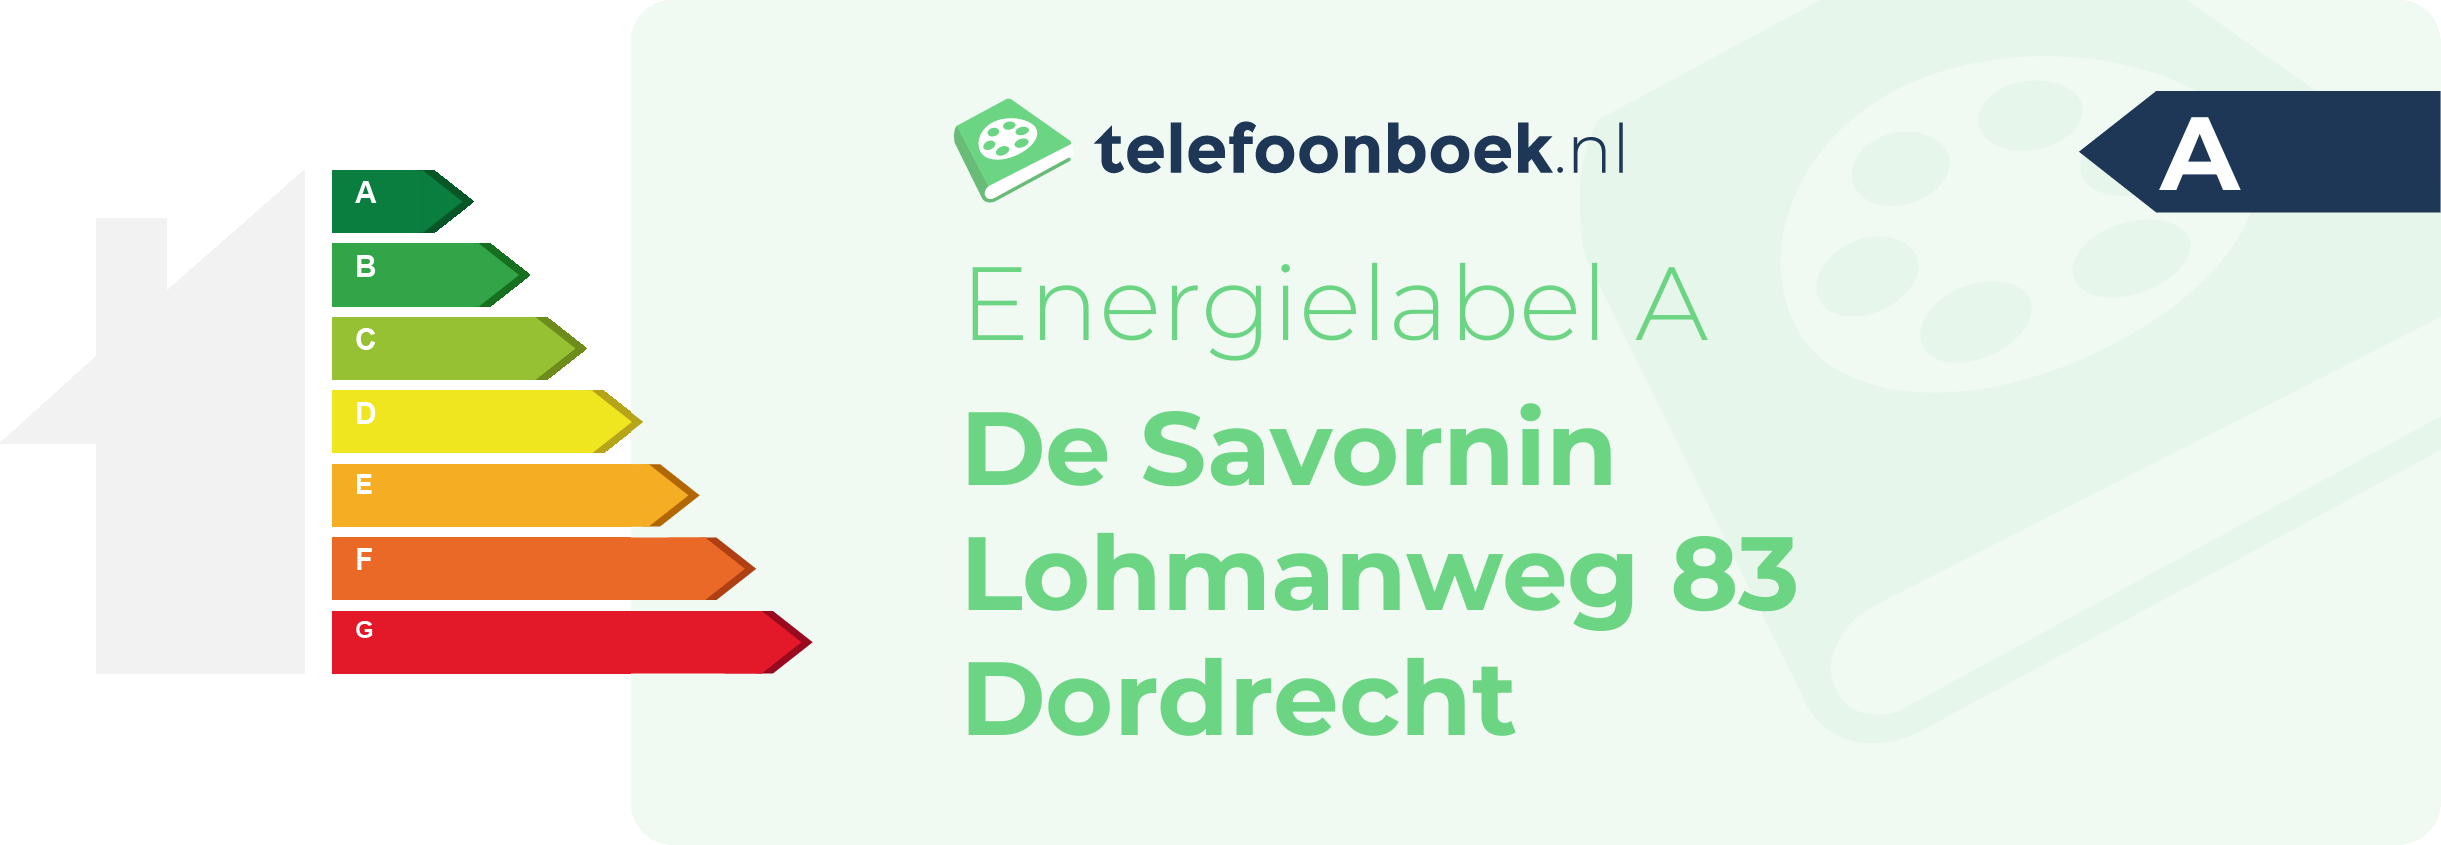 Energielabel De Savornin Lohmanweg 83 Dordrecht